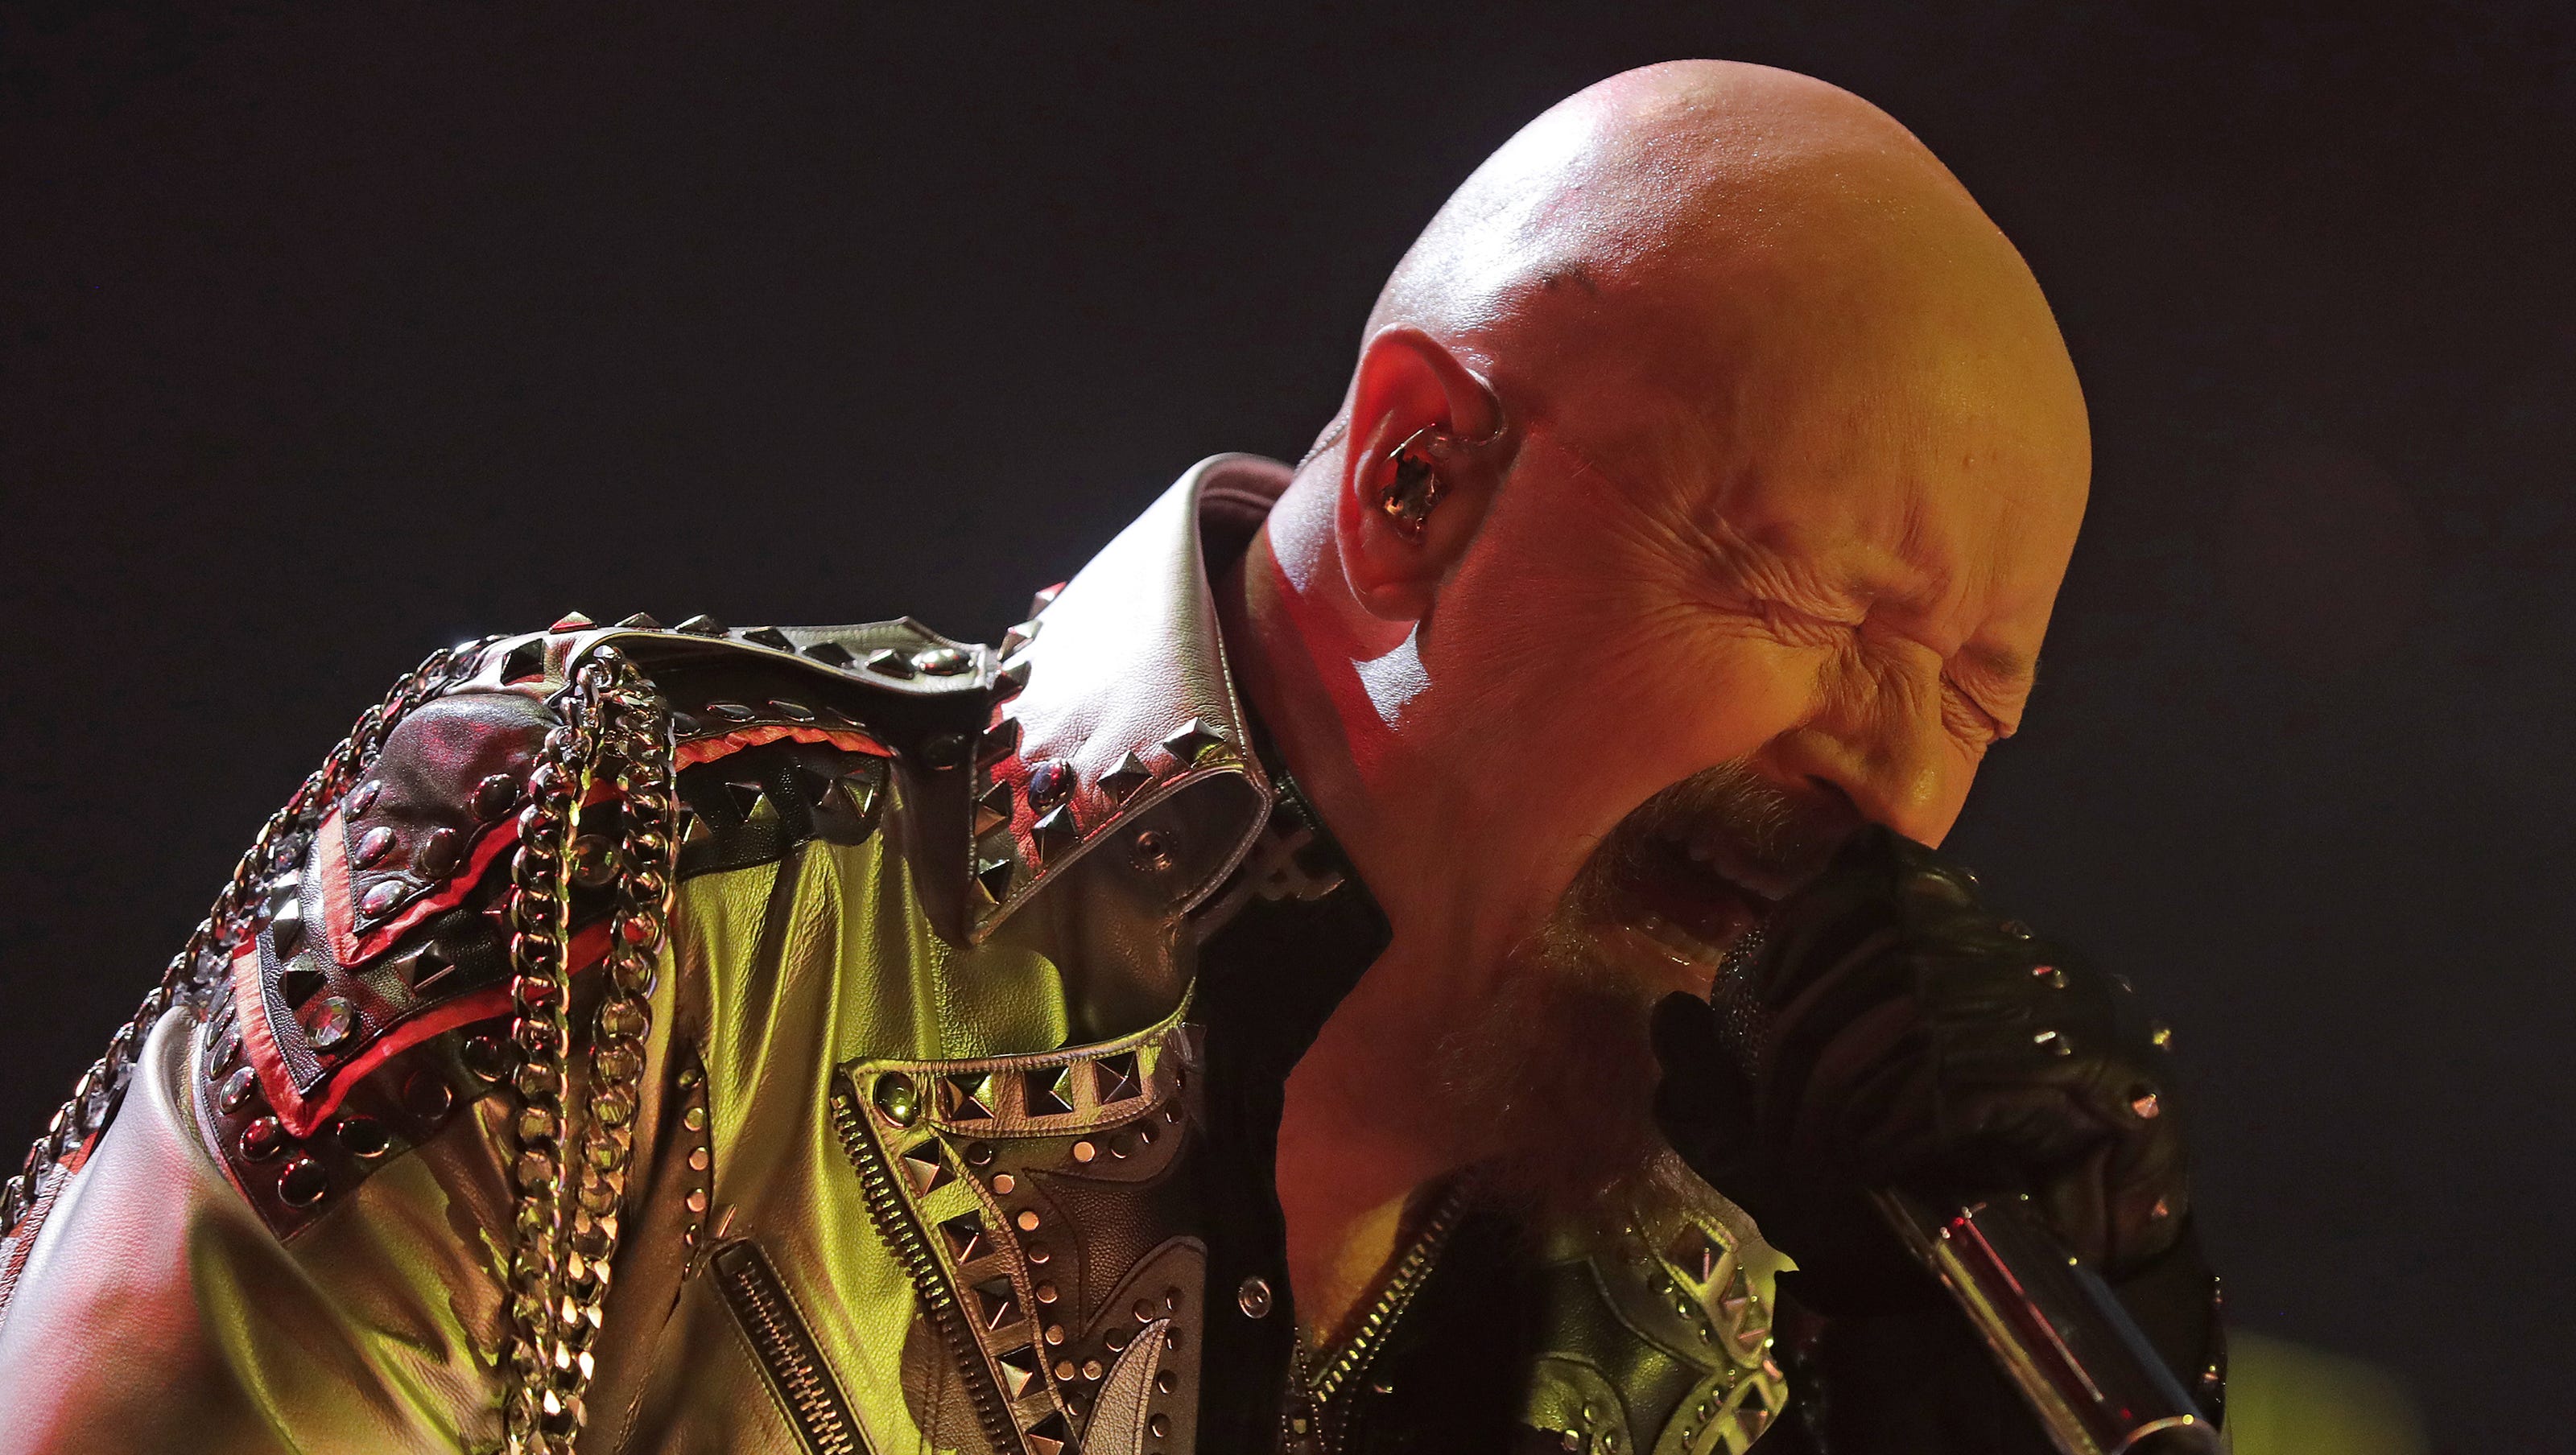 Judas Priest unleashes heavy metal 'Firepower' on Resch Center